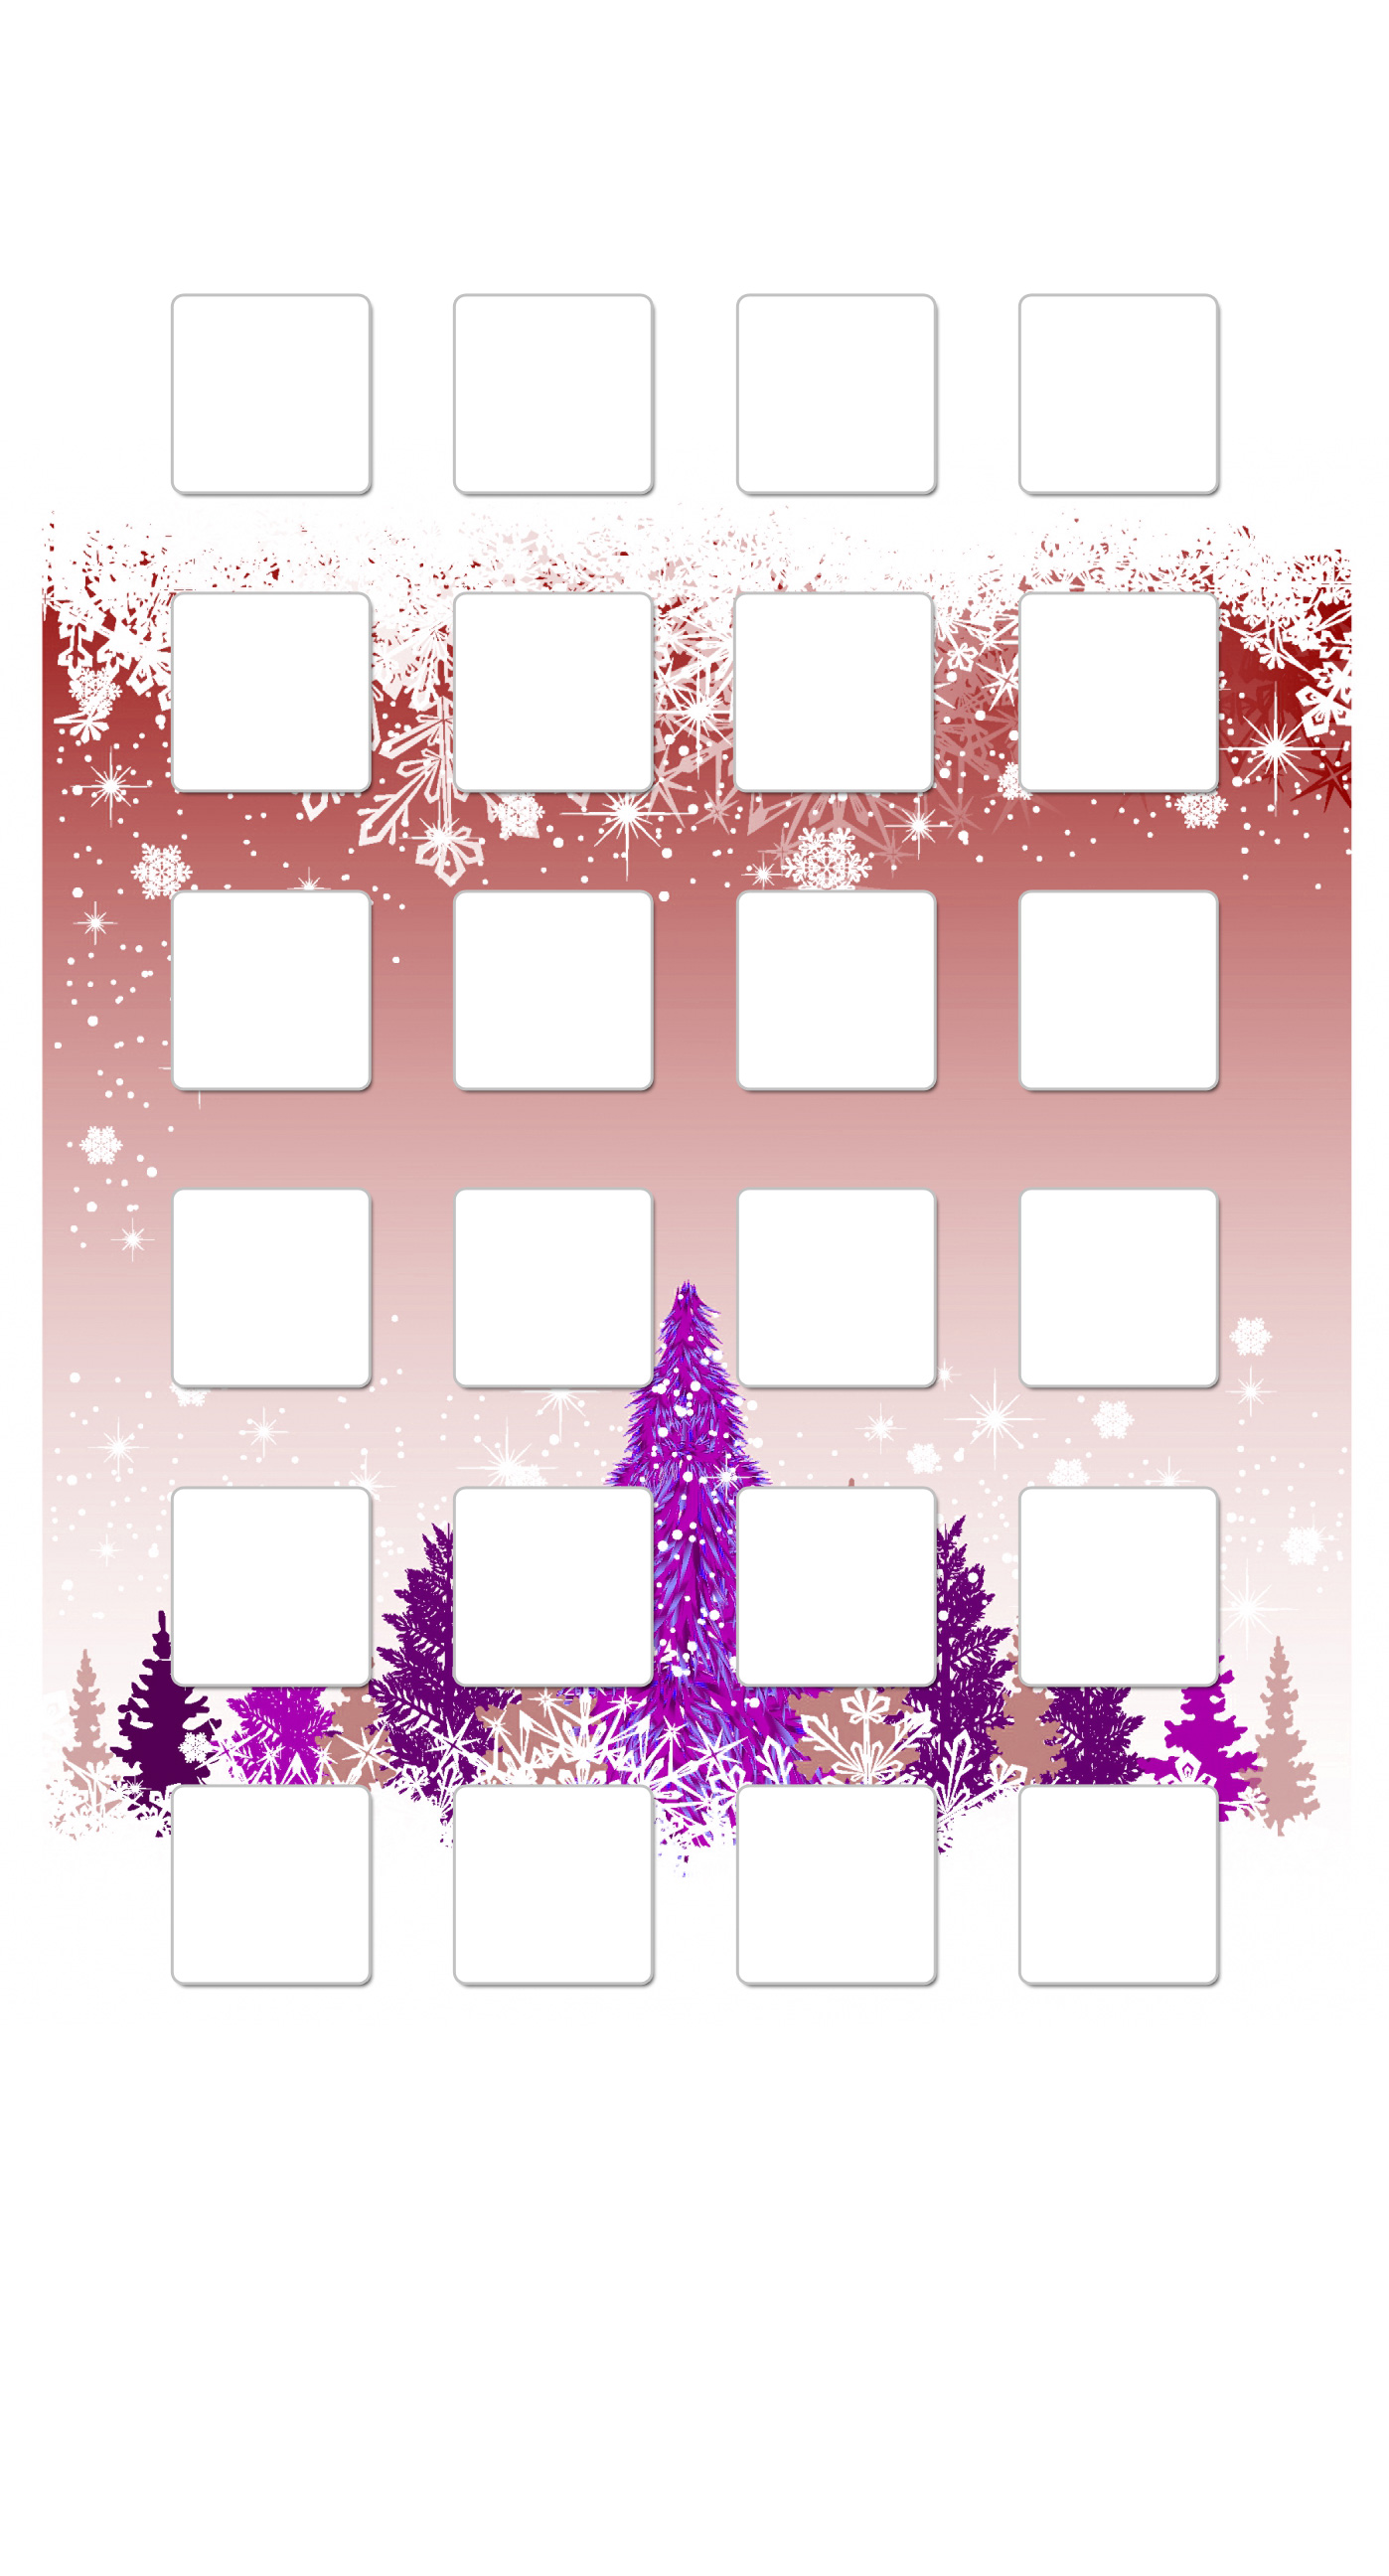 棚冬雪木赤紫可愛い女子向け Wallpaper Sc Iphone8plus壁紙